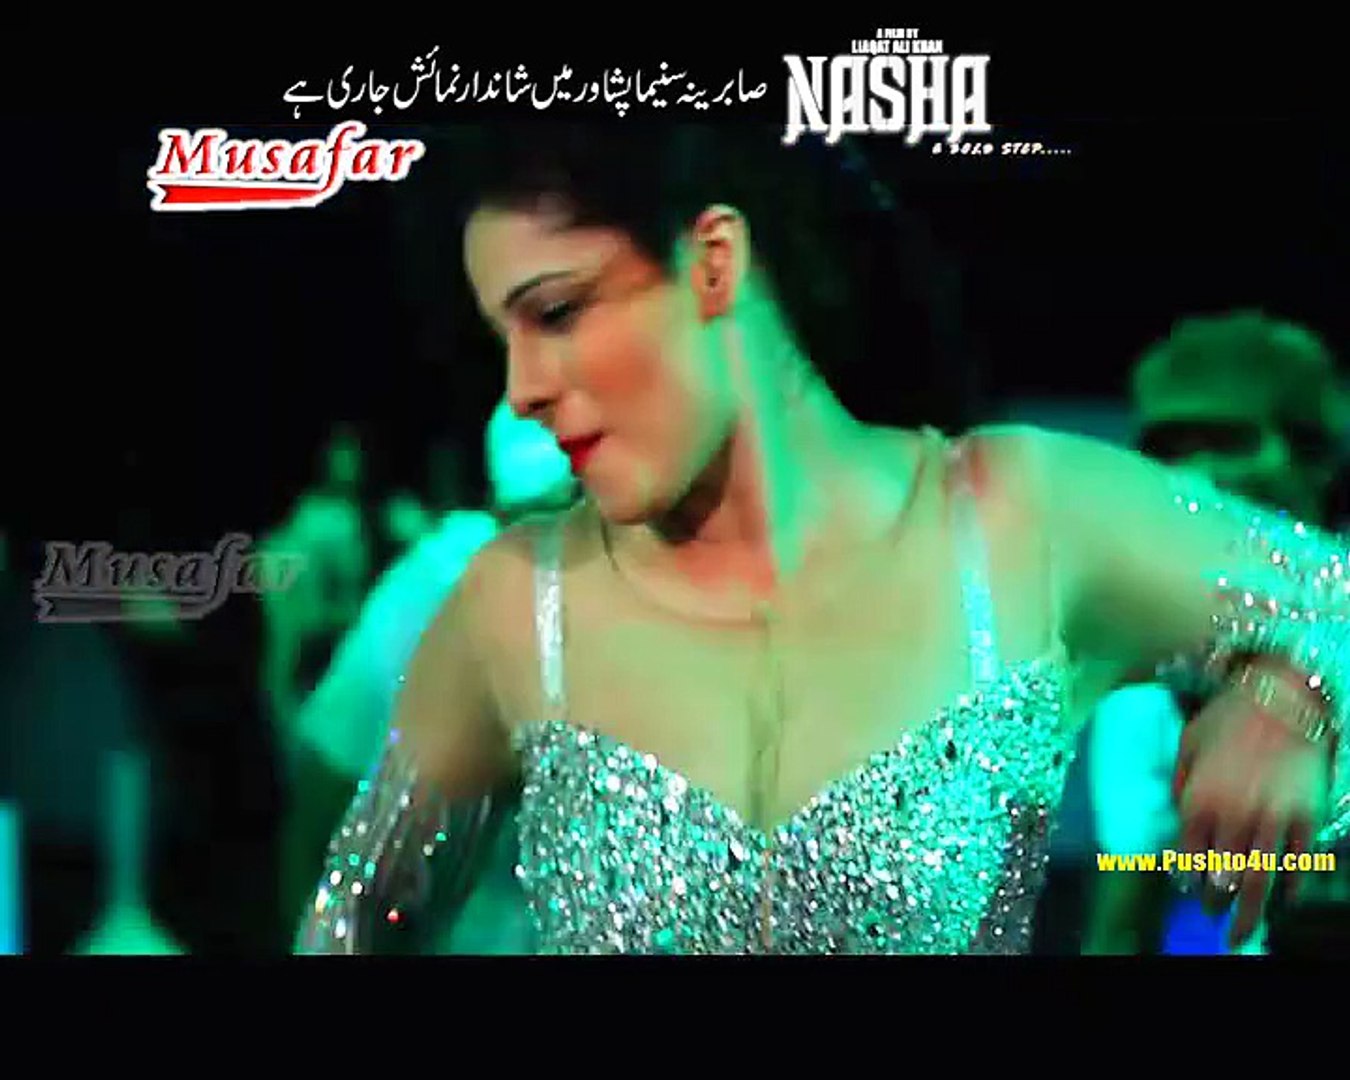 Gull Panra Xxxnx Video - Nasha Hits Gul Panra Pashto New HD Video Songs Part - 1 - video Dailymotion